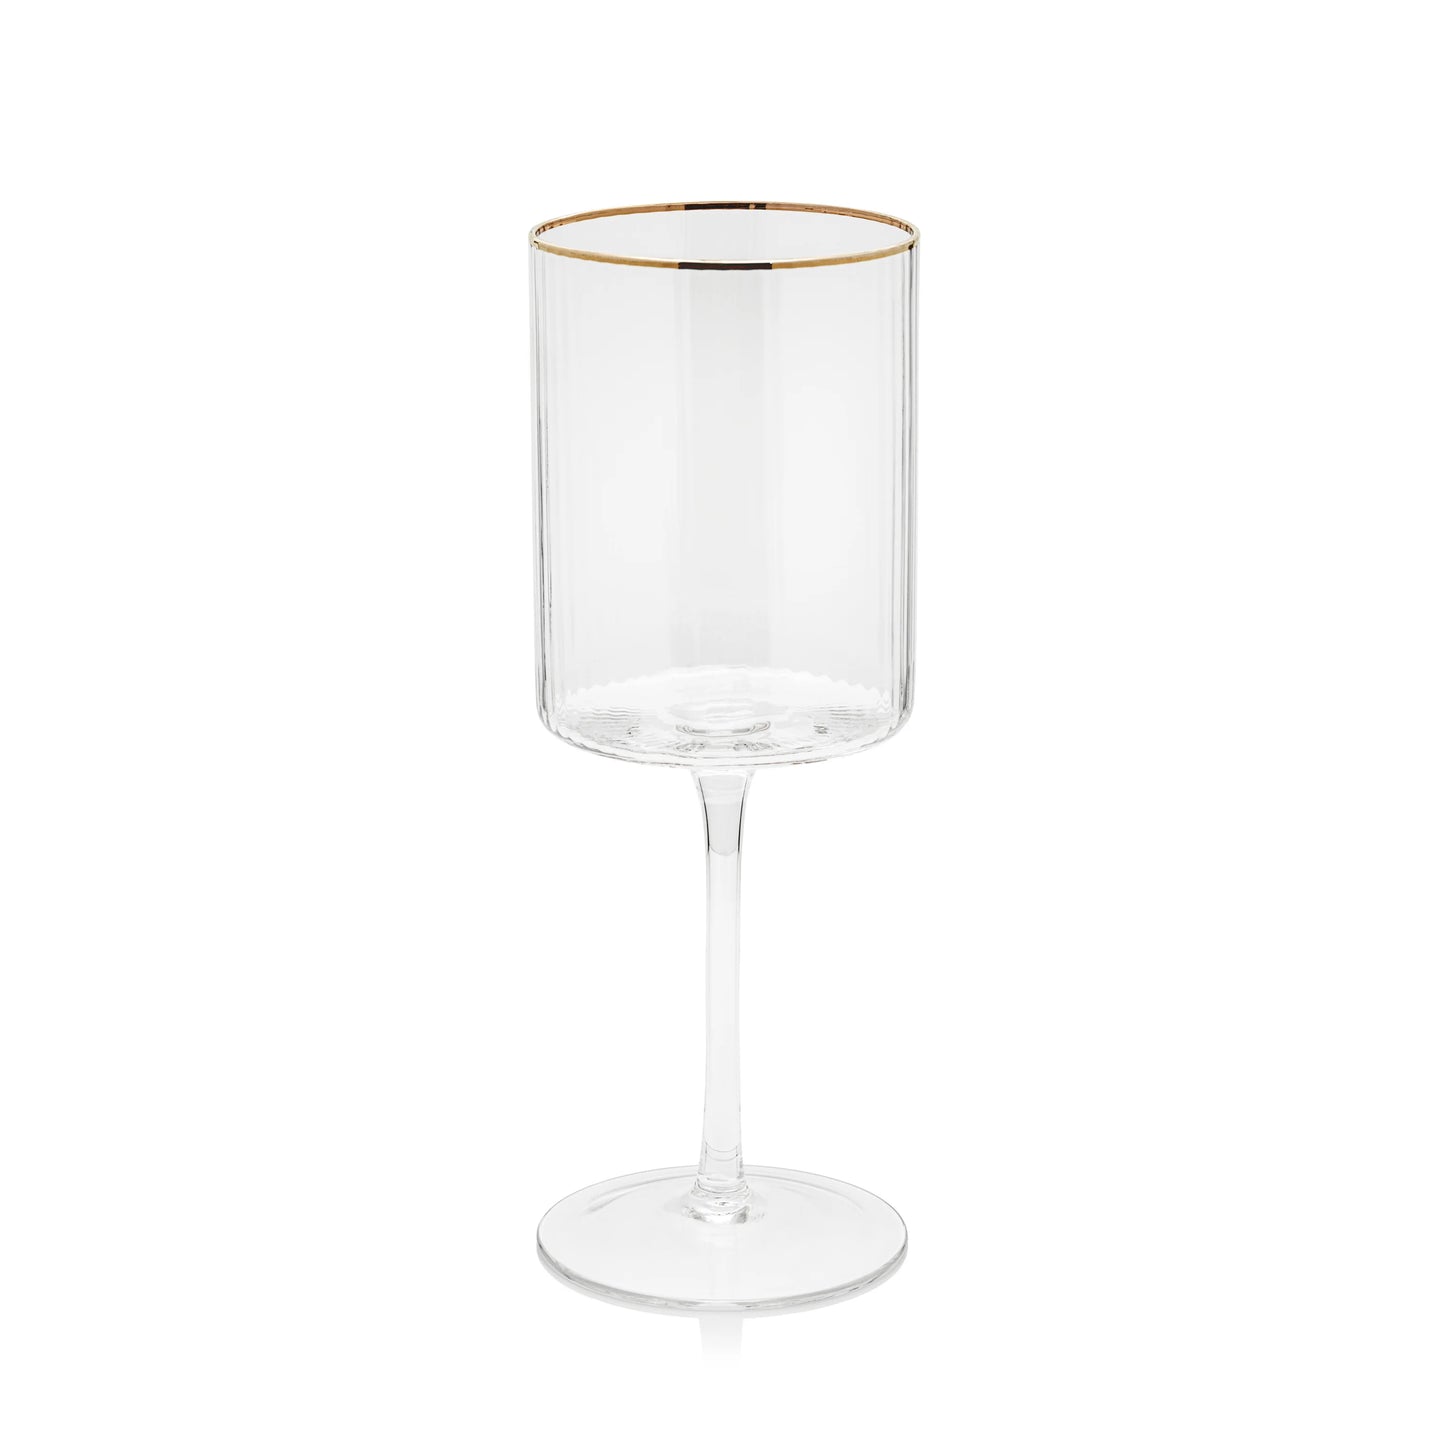 Optic Wine Glasses With Gold Rim